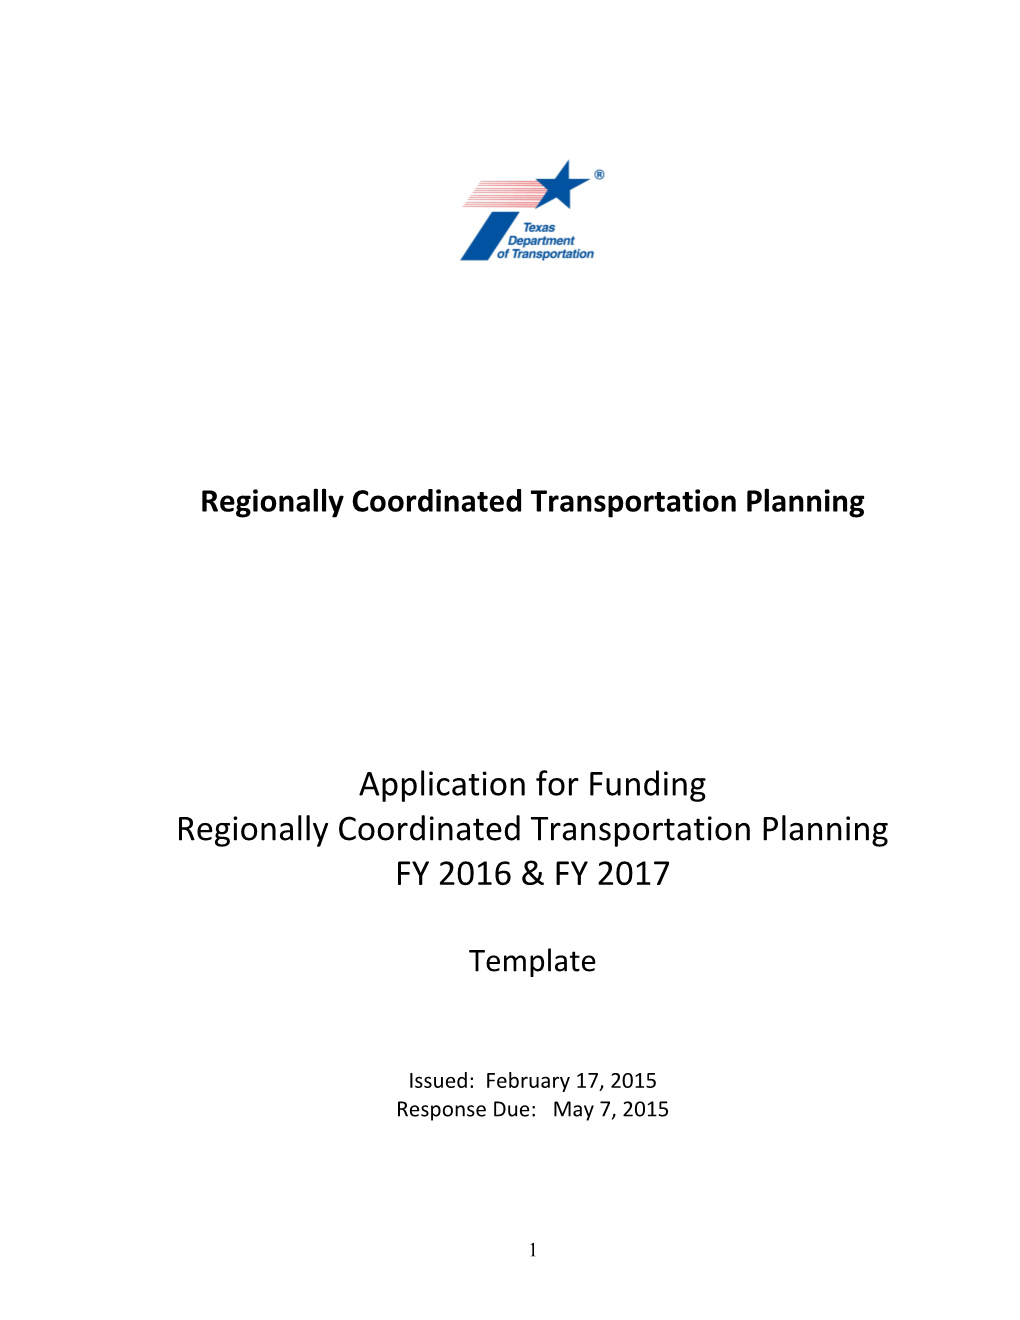 Regionally Coordinated Transportation Planning Application for Funding